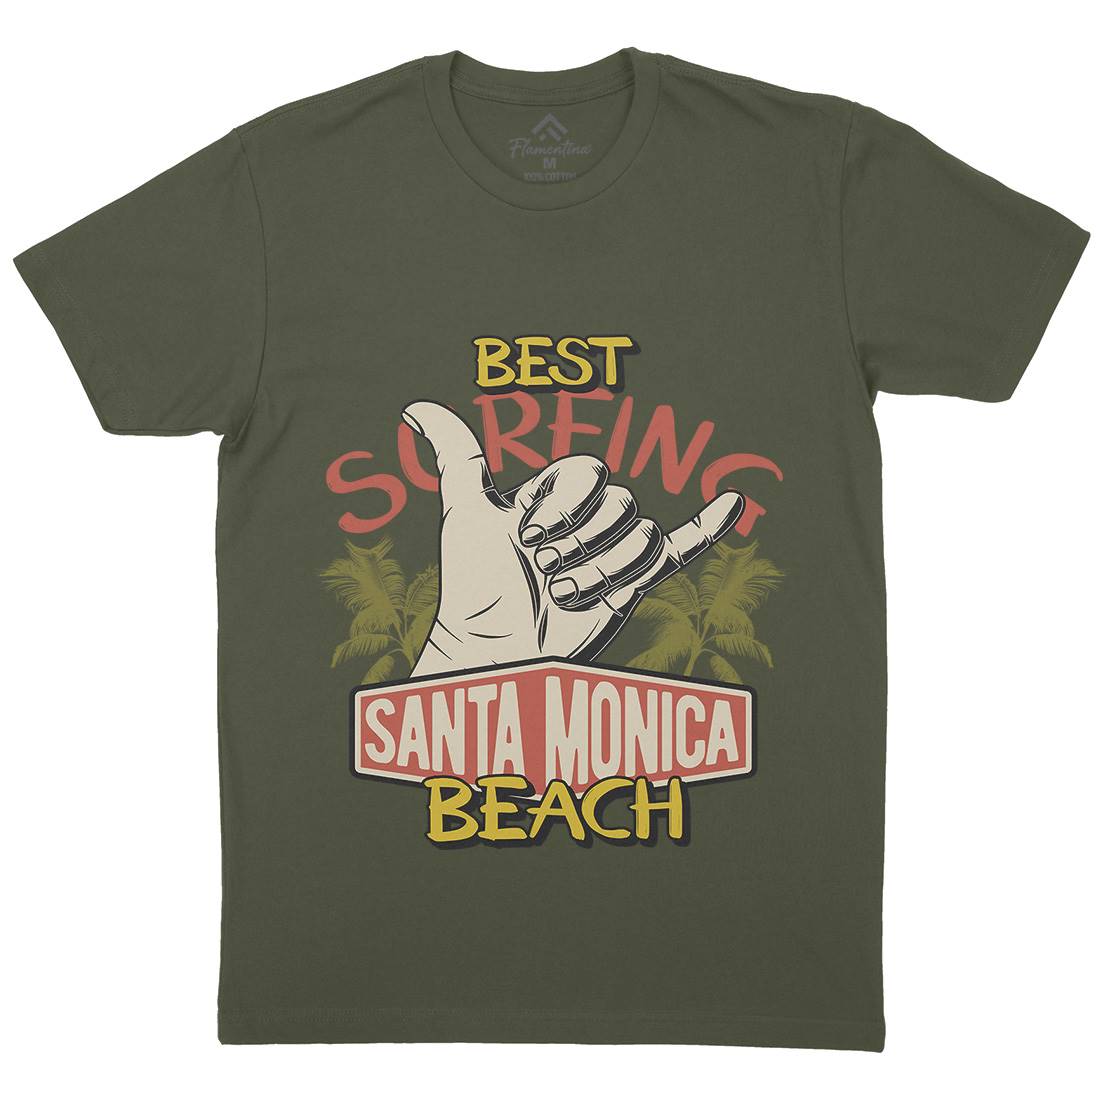 Best Surfing Beach Mens Crew Neck T-Shirt Surf D909